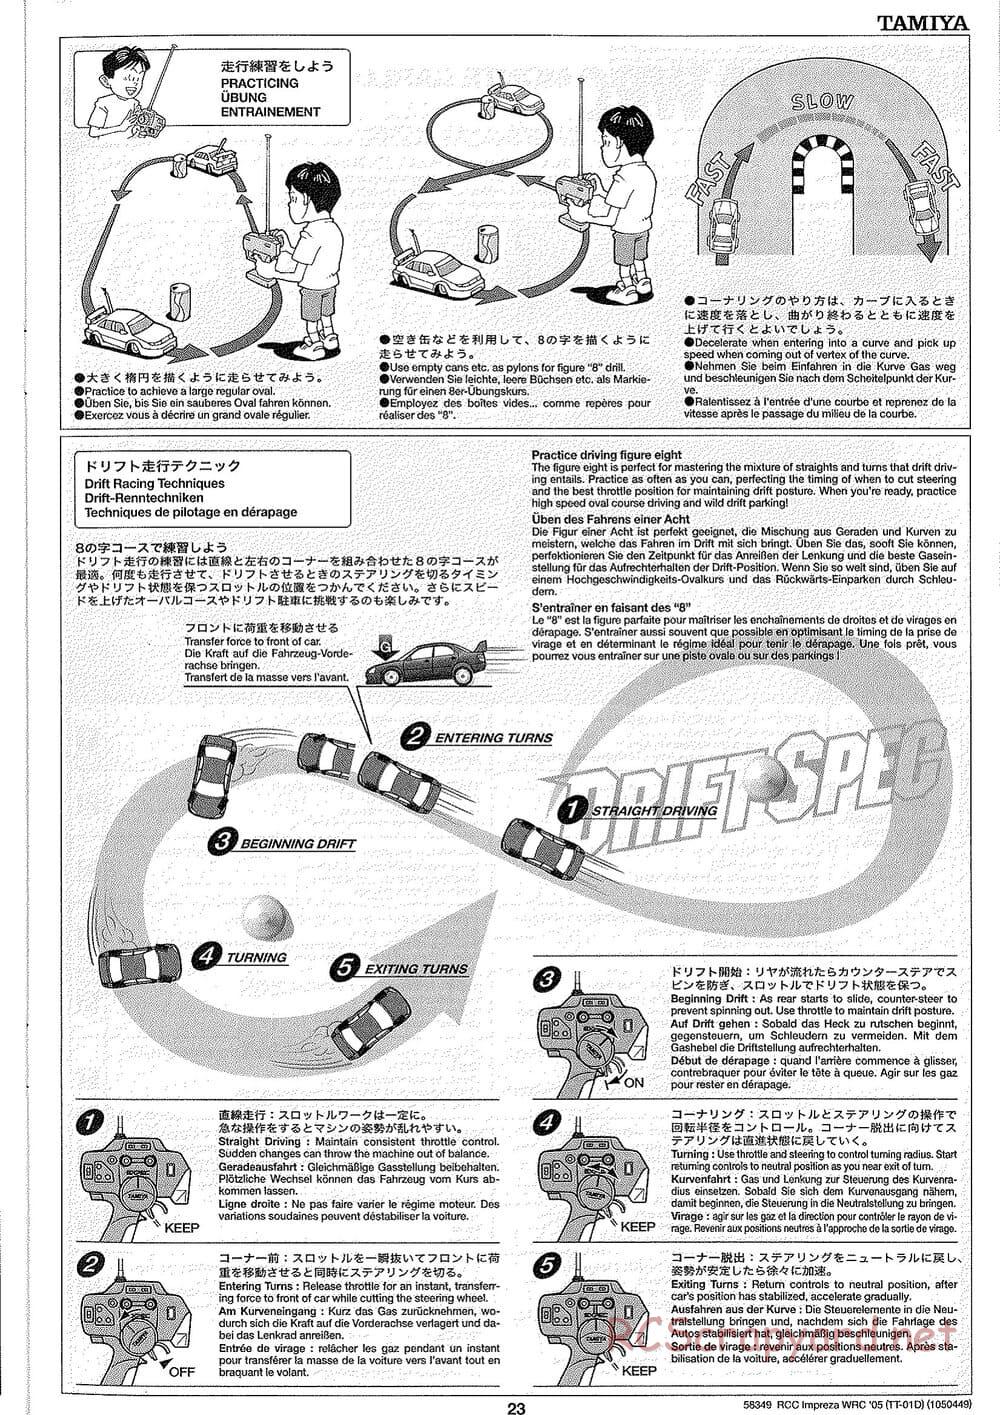 Tamiya - Subaru Impreza WRC Monte Carlo 05 - Drift Spec - TT-01D Chassis - Manual - Page 23